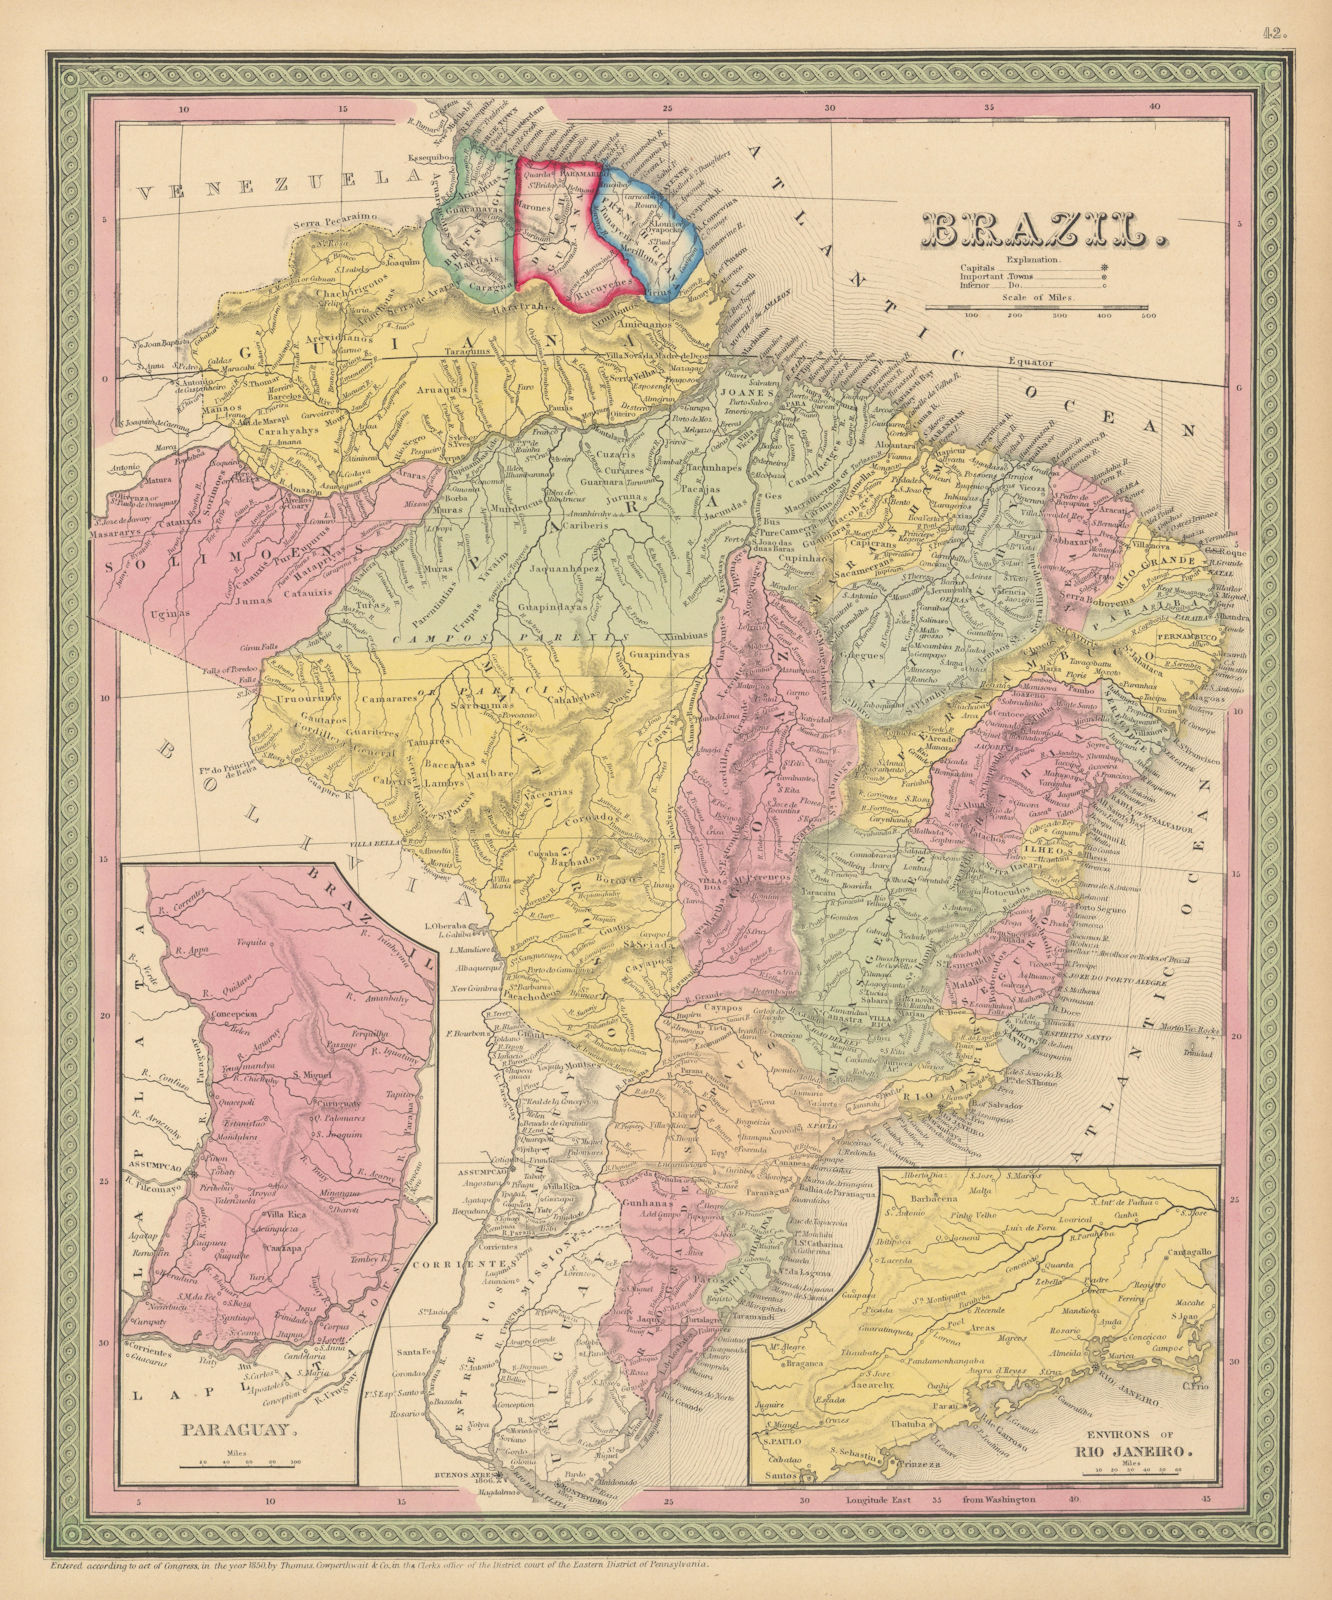 Brazil, Paraguay & the Guianas. Rio de Janeiro environs. COWPERTHWAIT 1852 map